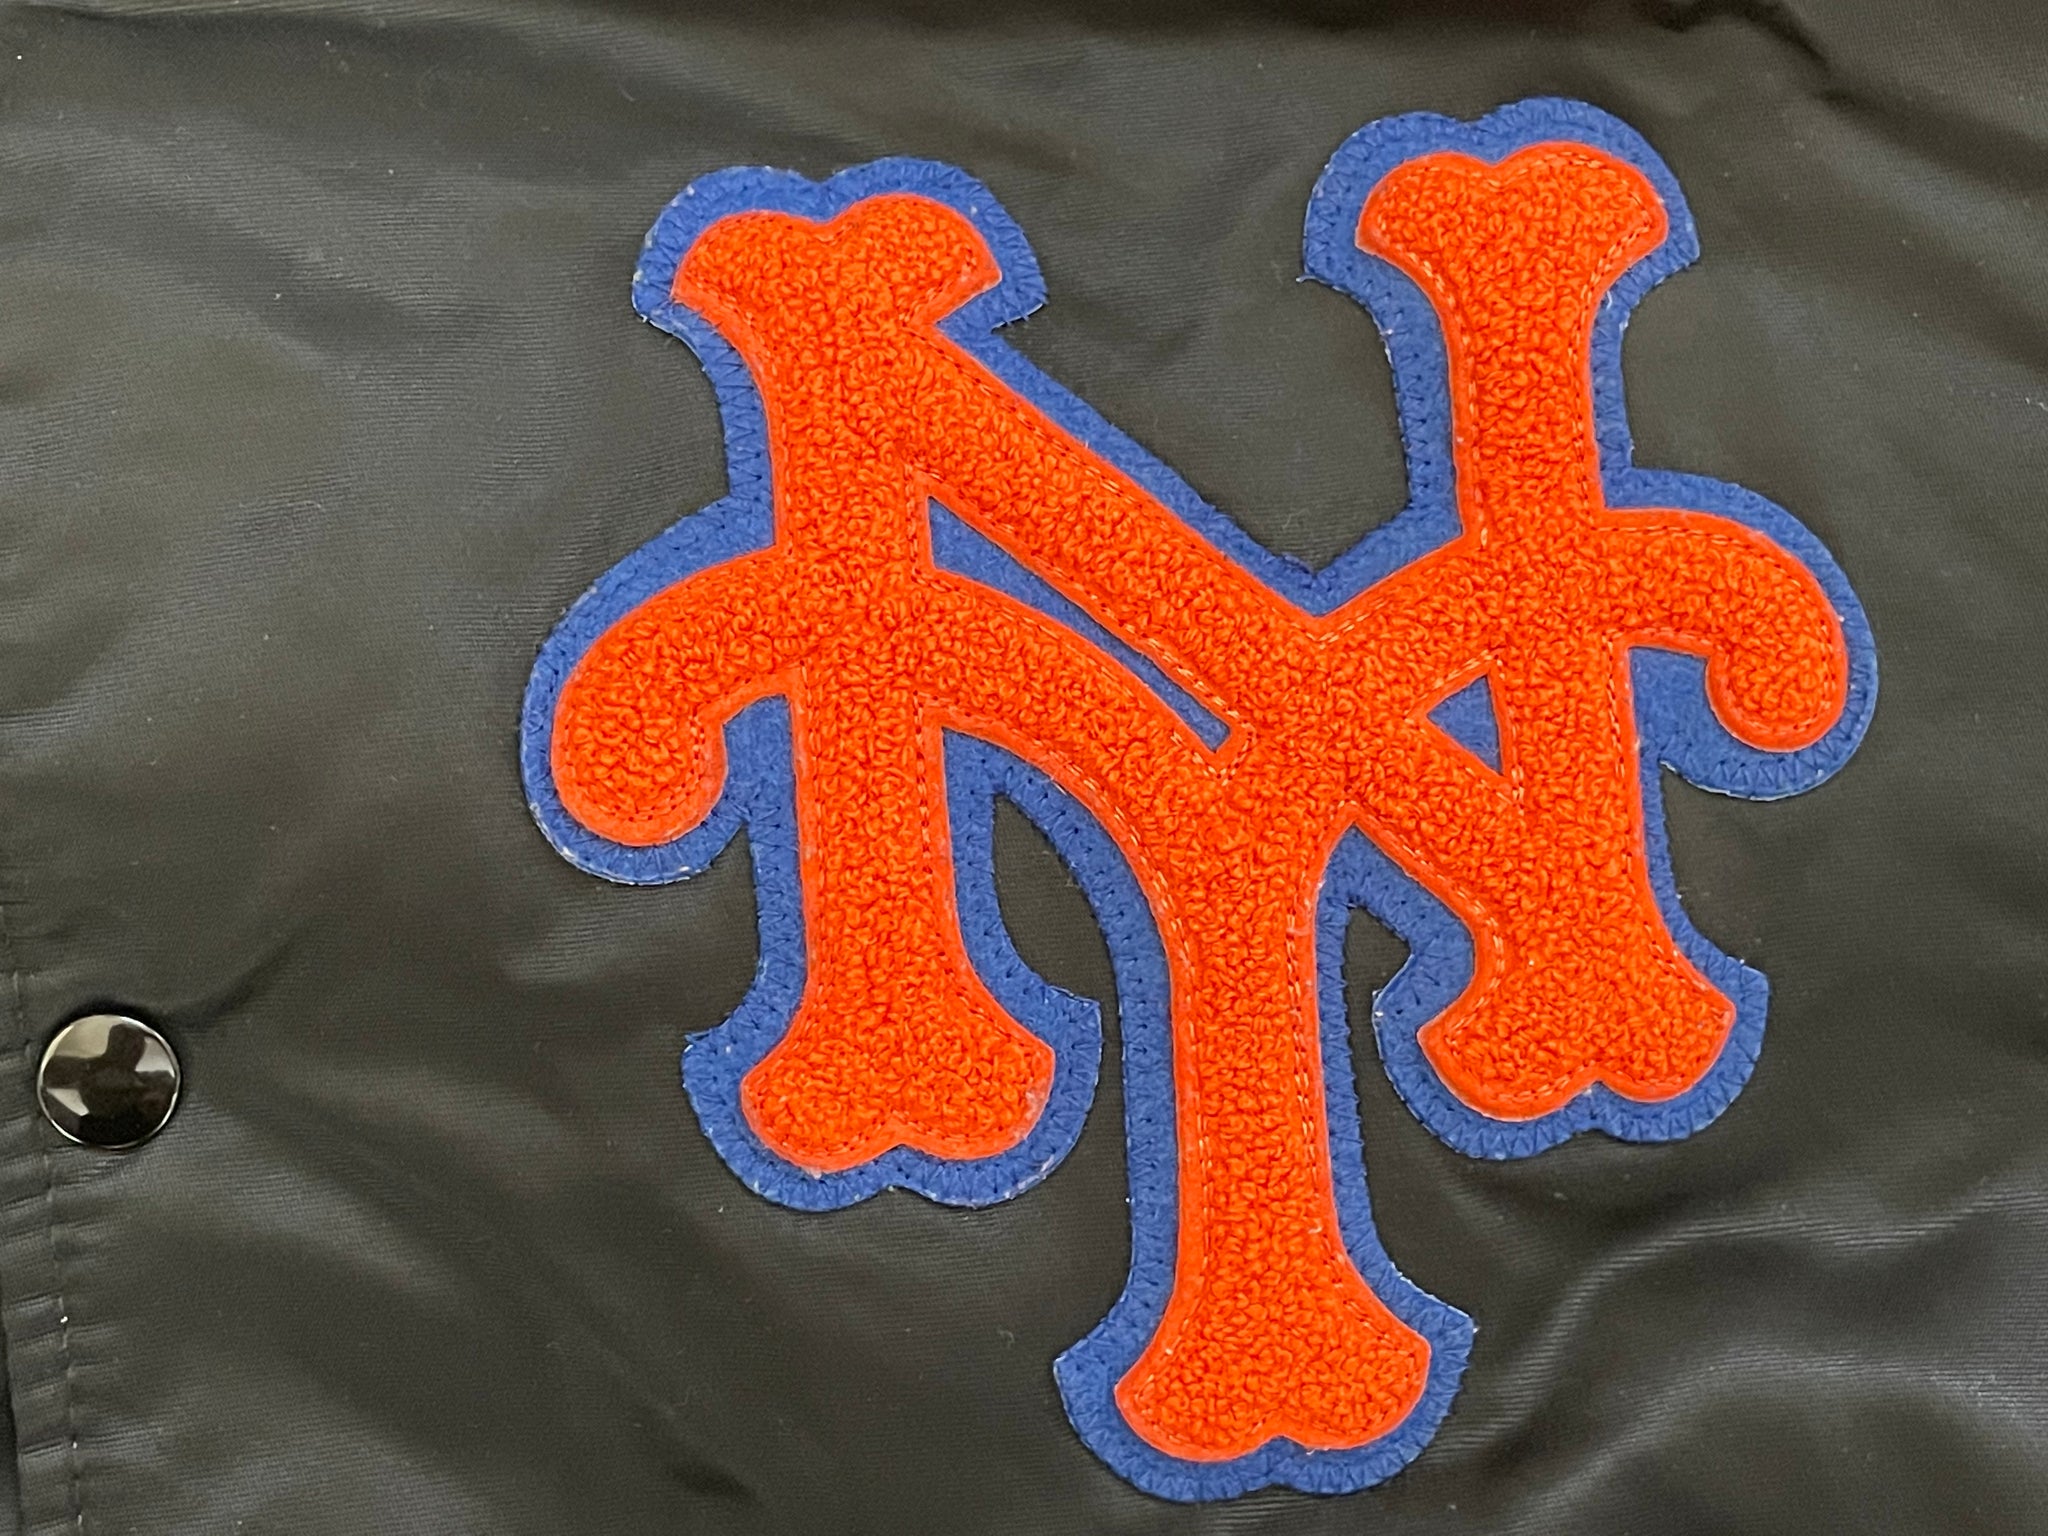 Vintage New York Mets Hard Ball Starter T-Shirt